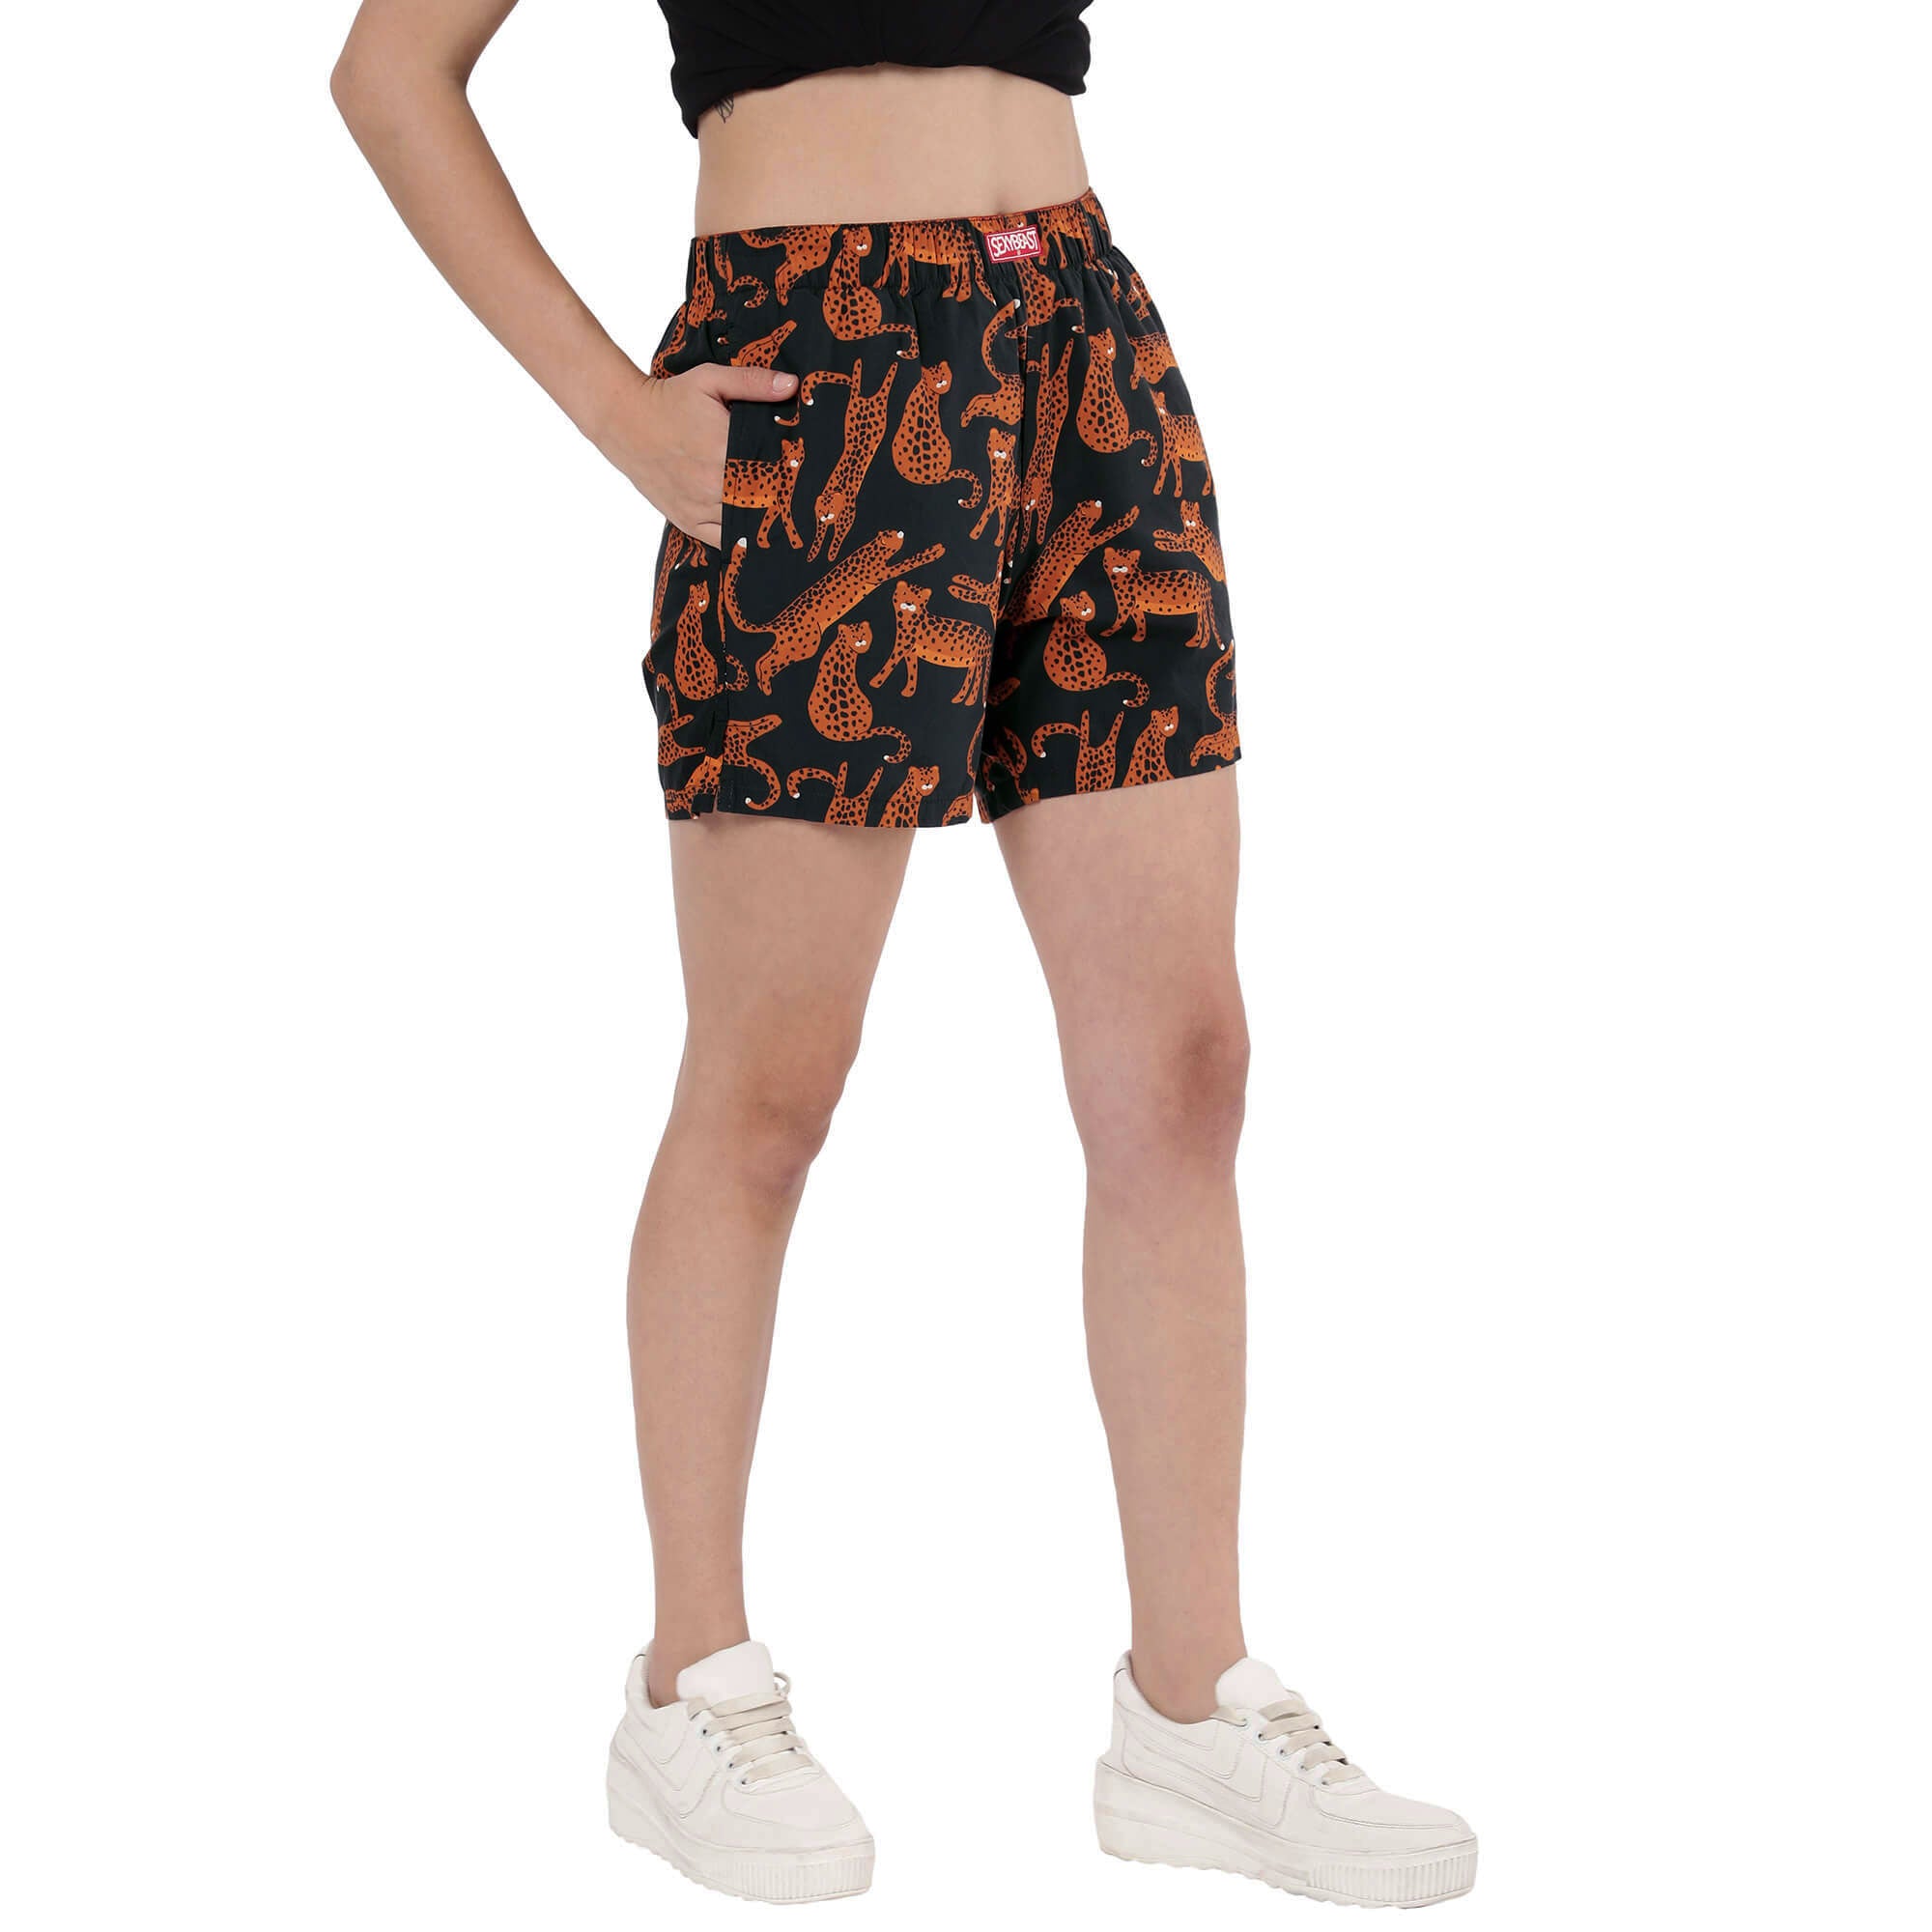 Boxer Shorts For Women